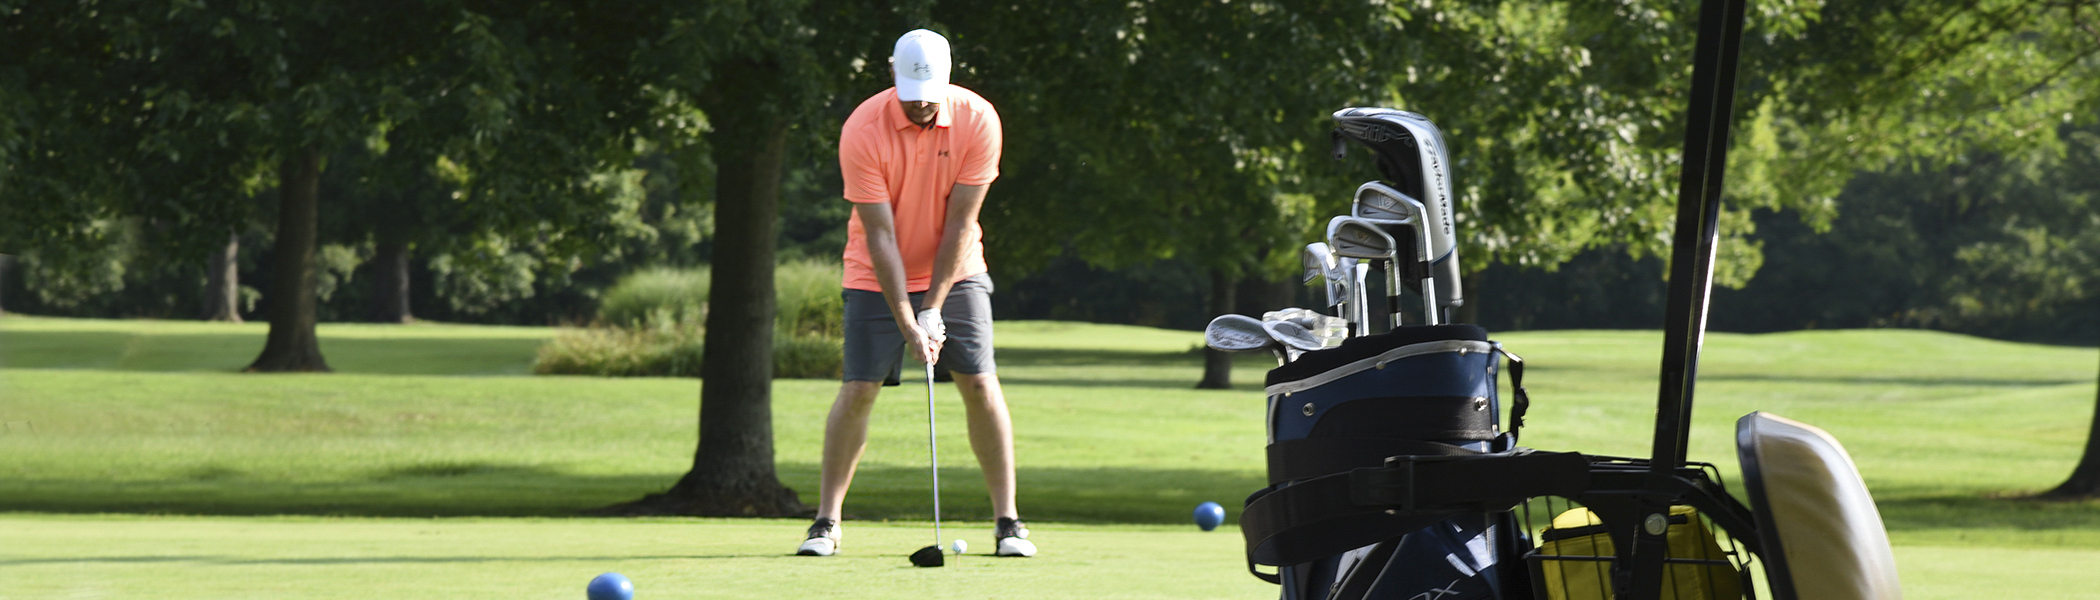 Golfer at Bunker Hill Golf Course